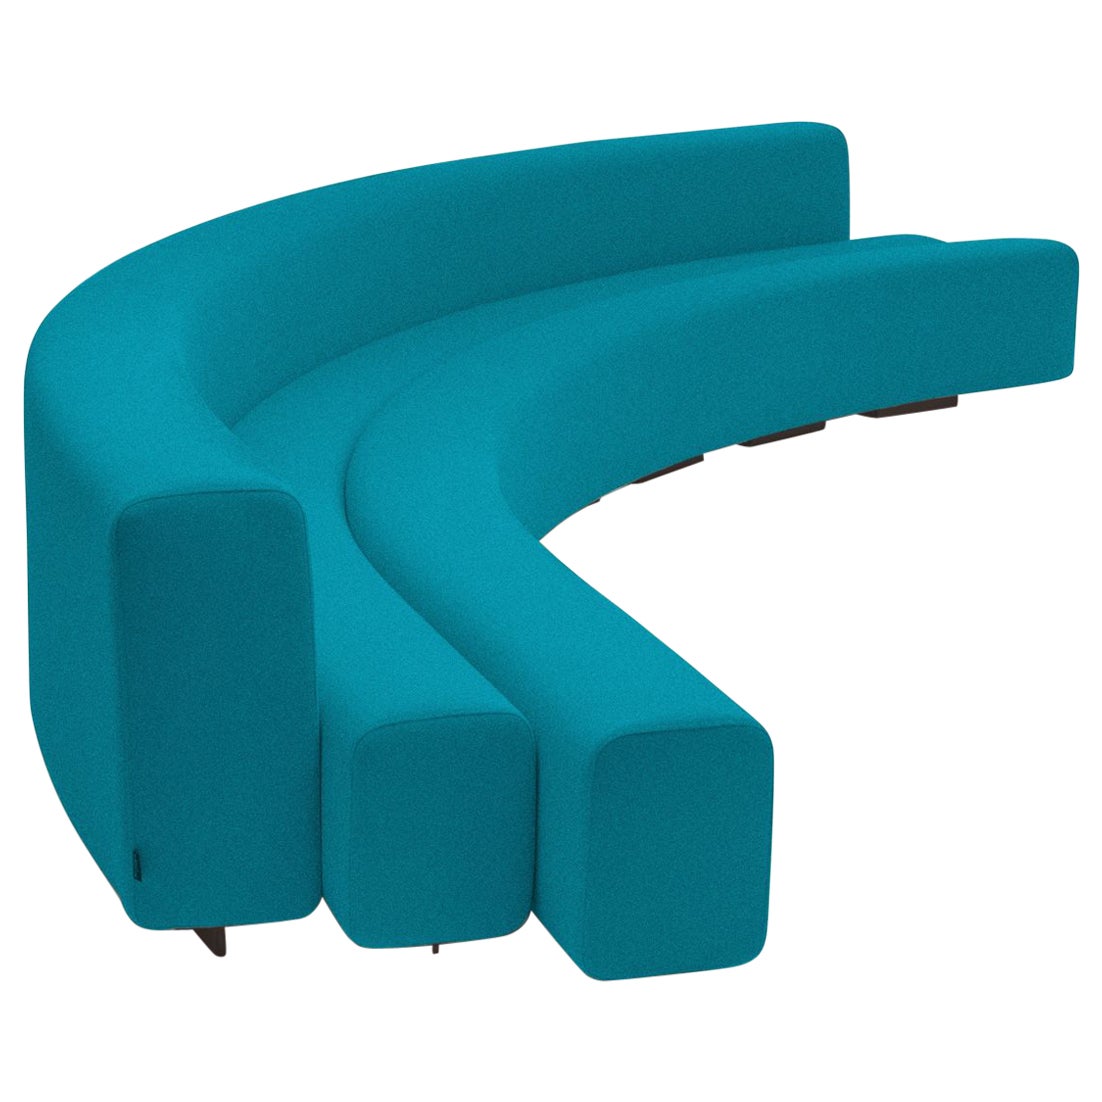 Osaka Cyan Flexible Curve Sofa by La Cividina